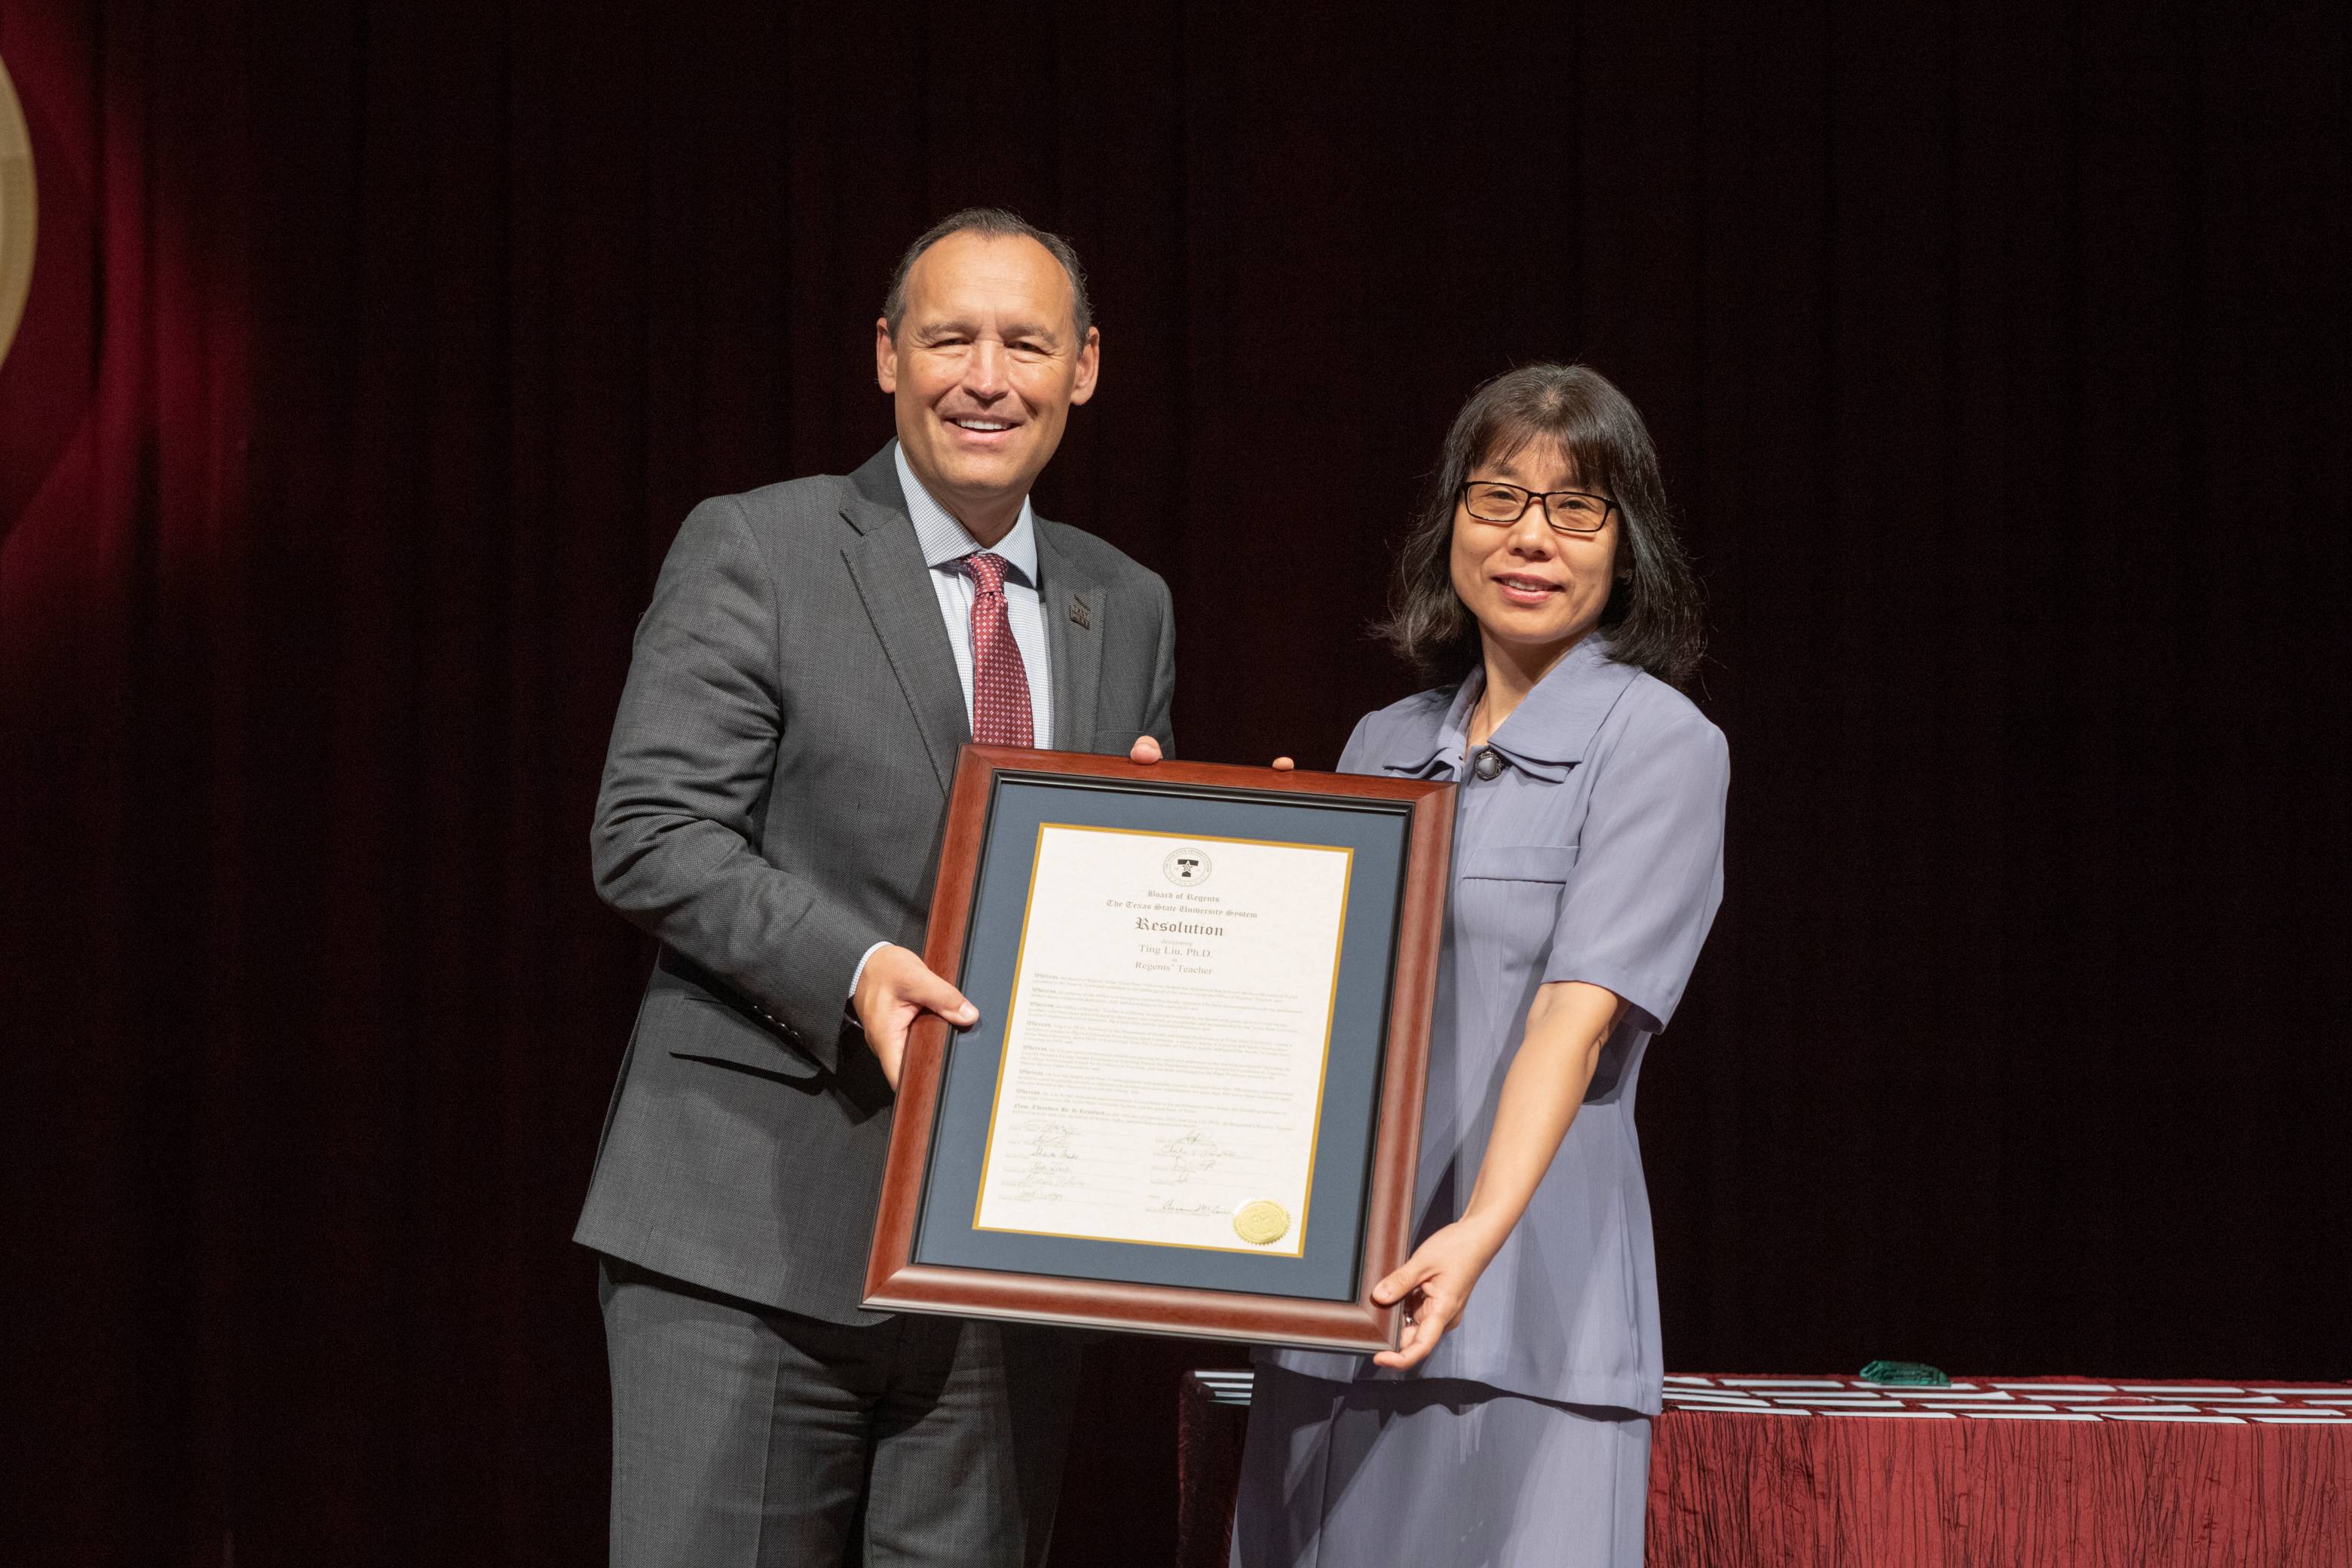 Dr. Liu receiving award from Dr. Damphousse